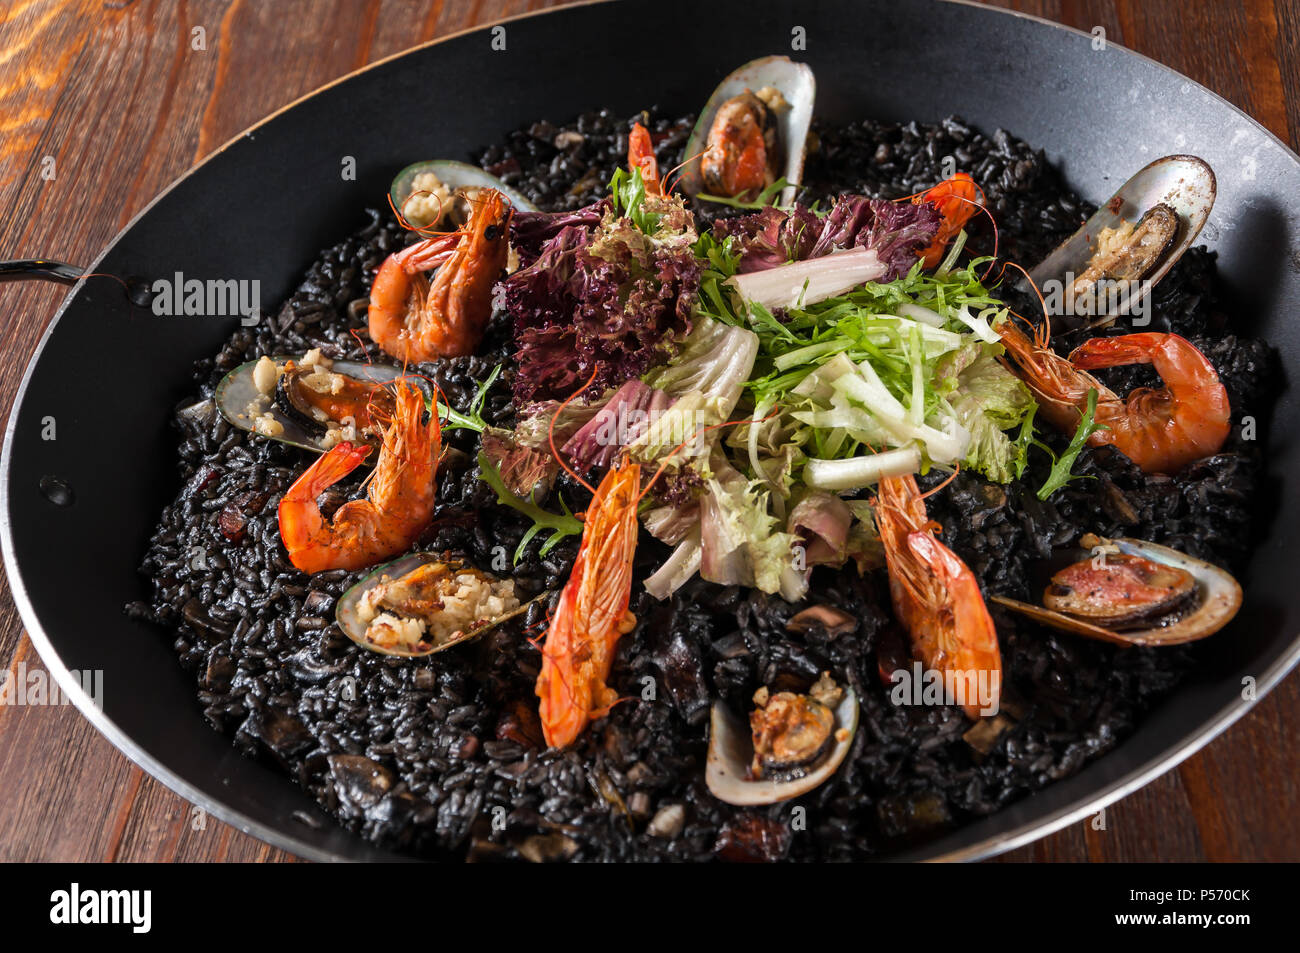 Paella,Seafood with black rice Stock Photo - Alamy